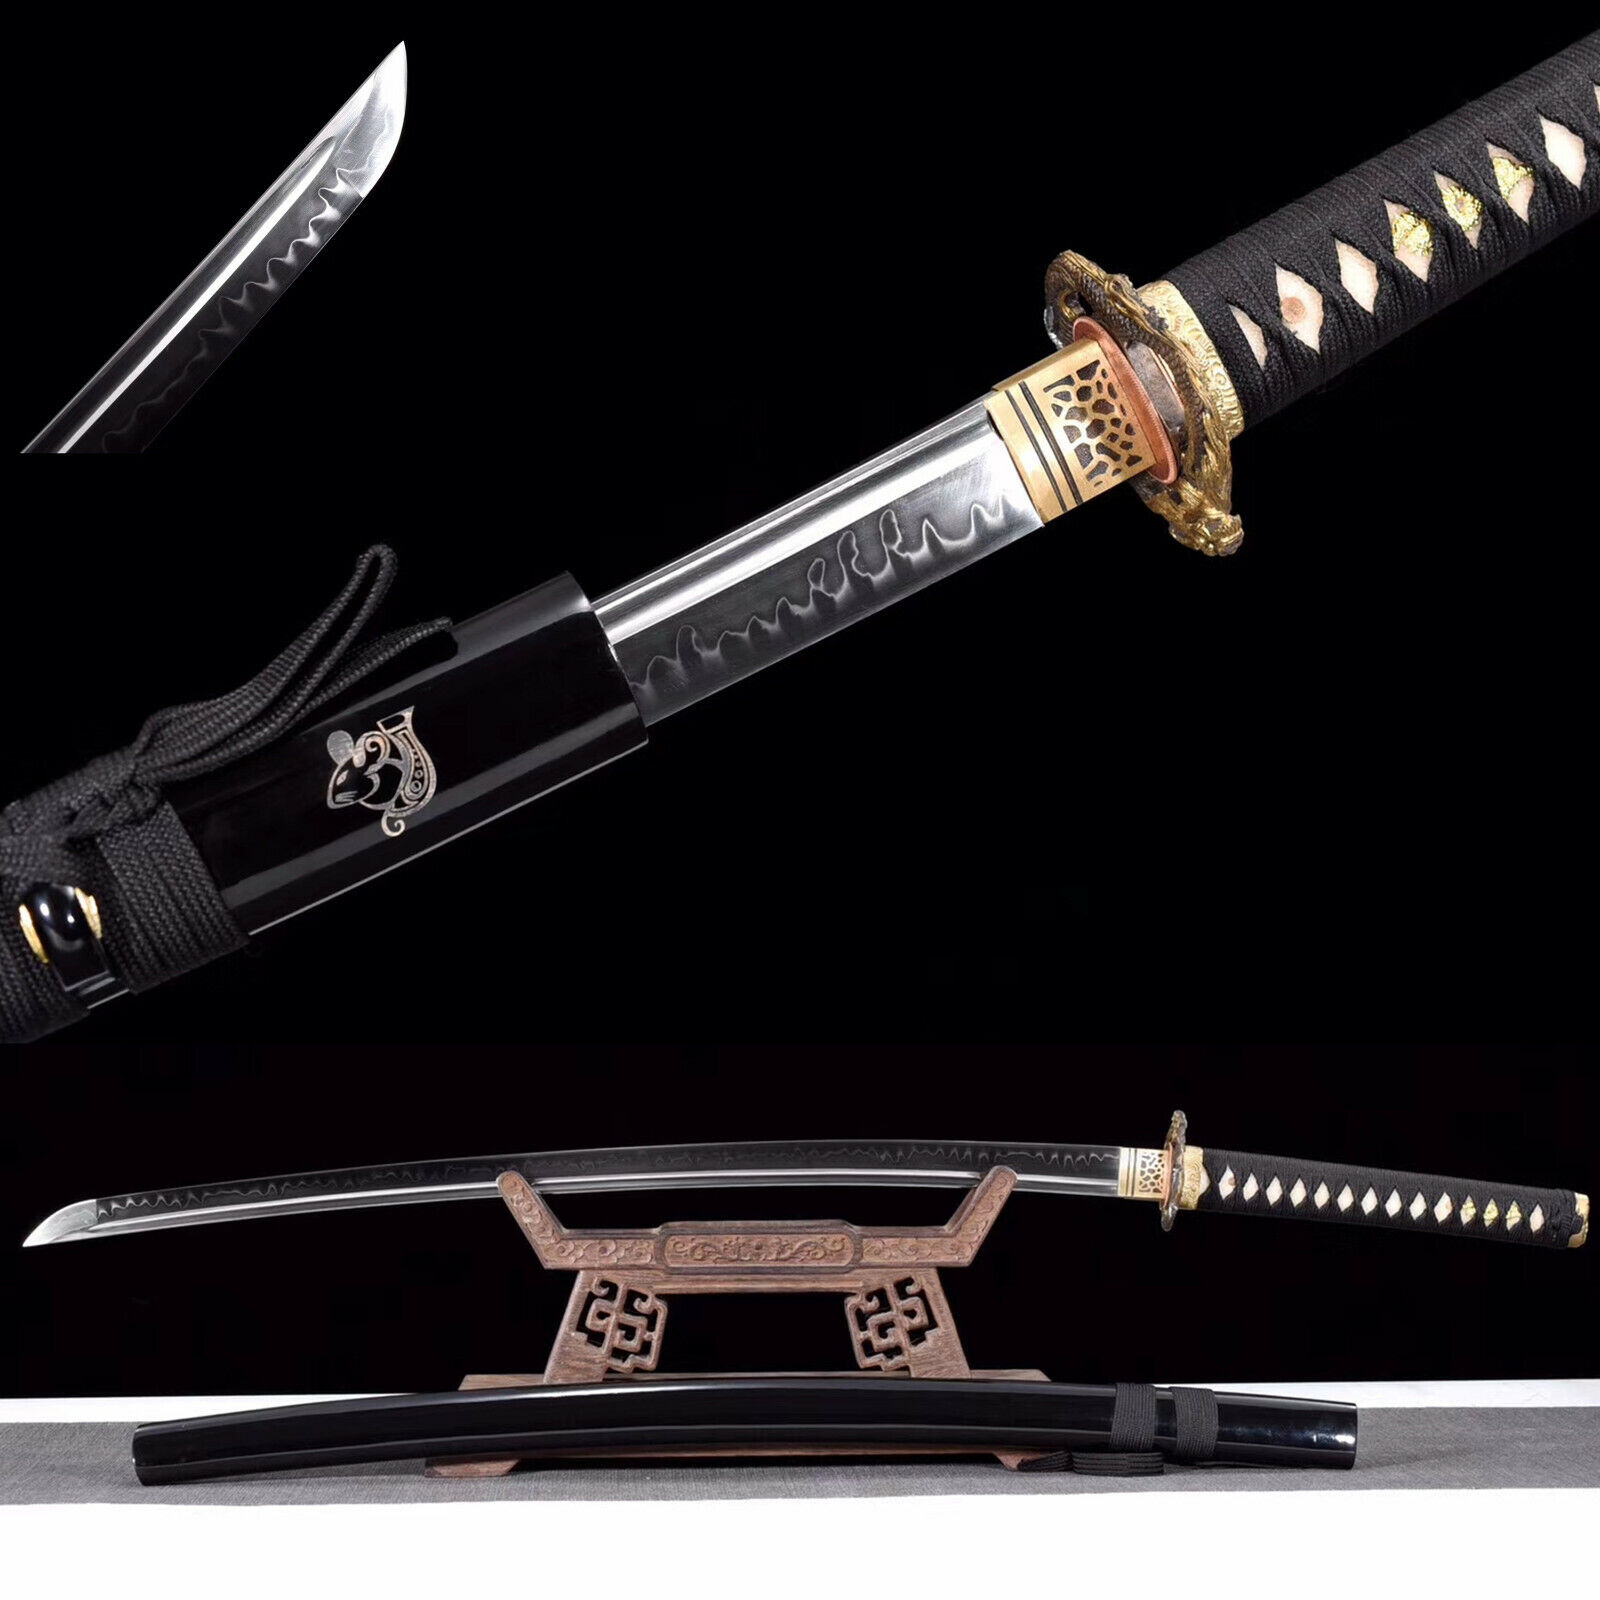 Handmade Japanese Clay Tempered T10 Steel Samurai Katana Sword Sharp 